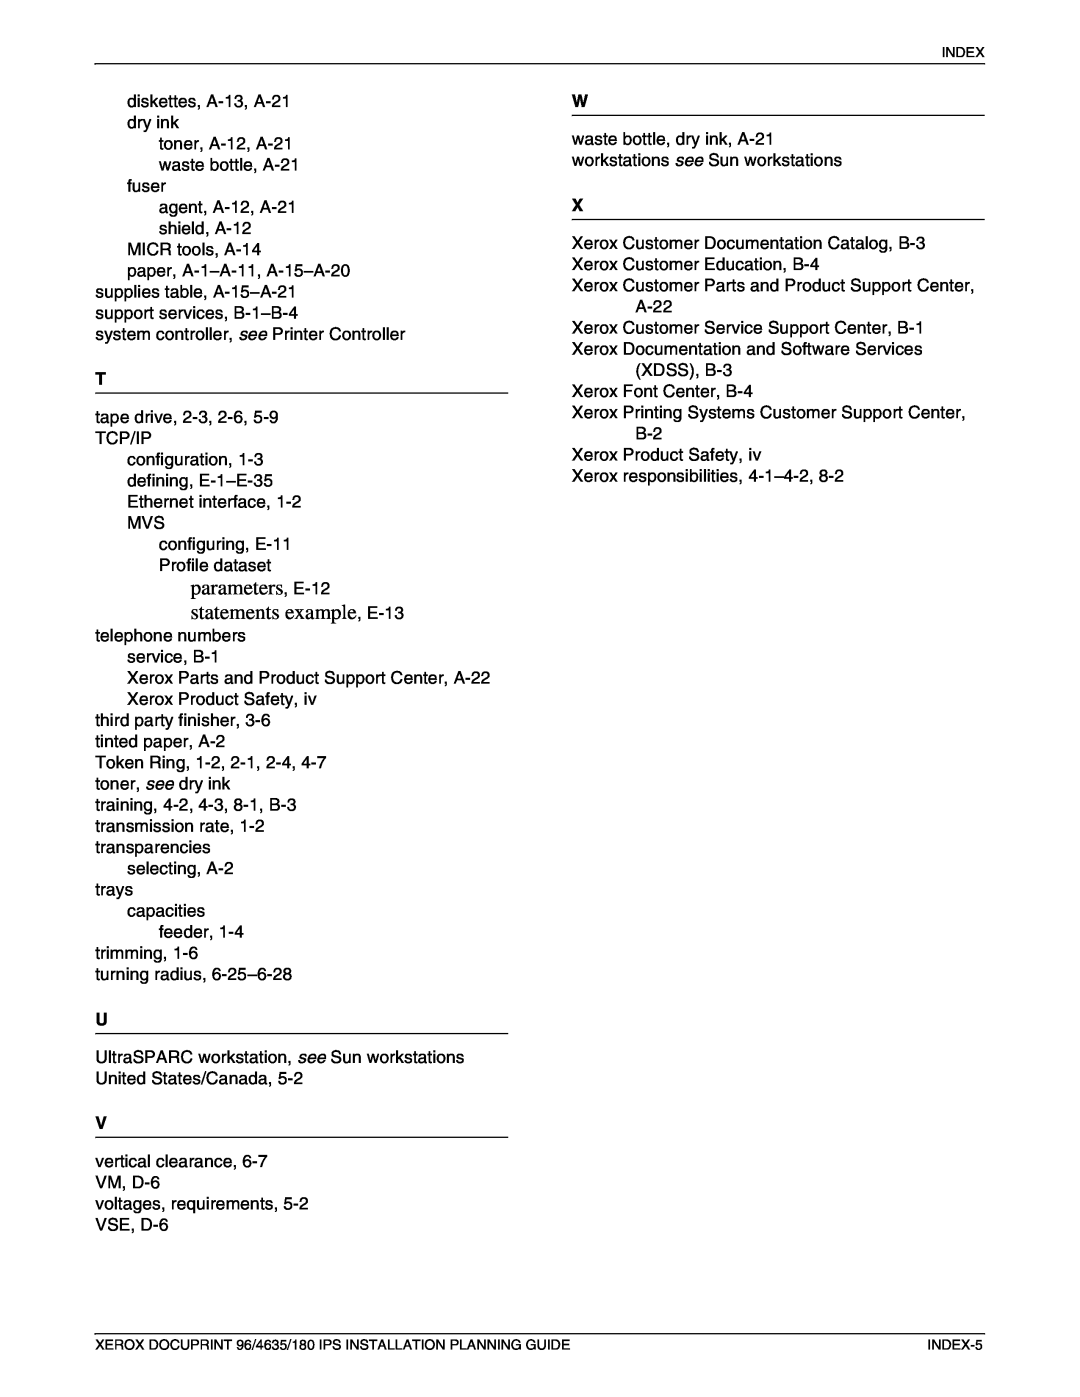 Xerox 180 IPS manual parameters, E-12 statements example, E-13 